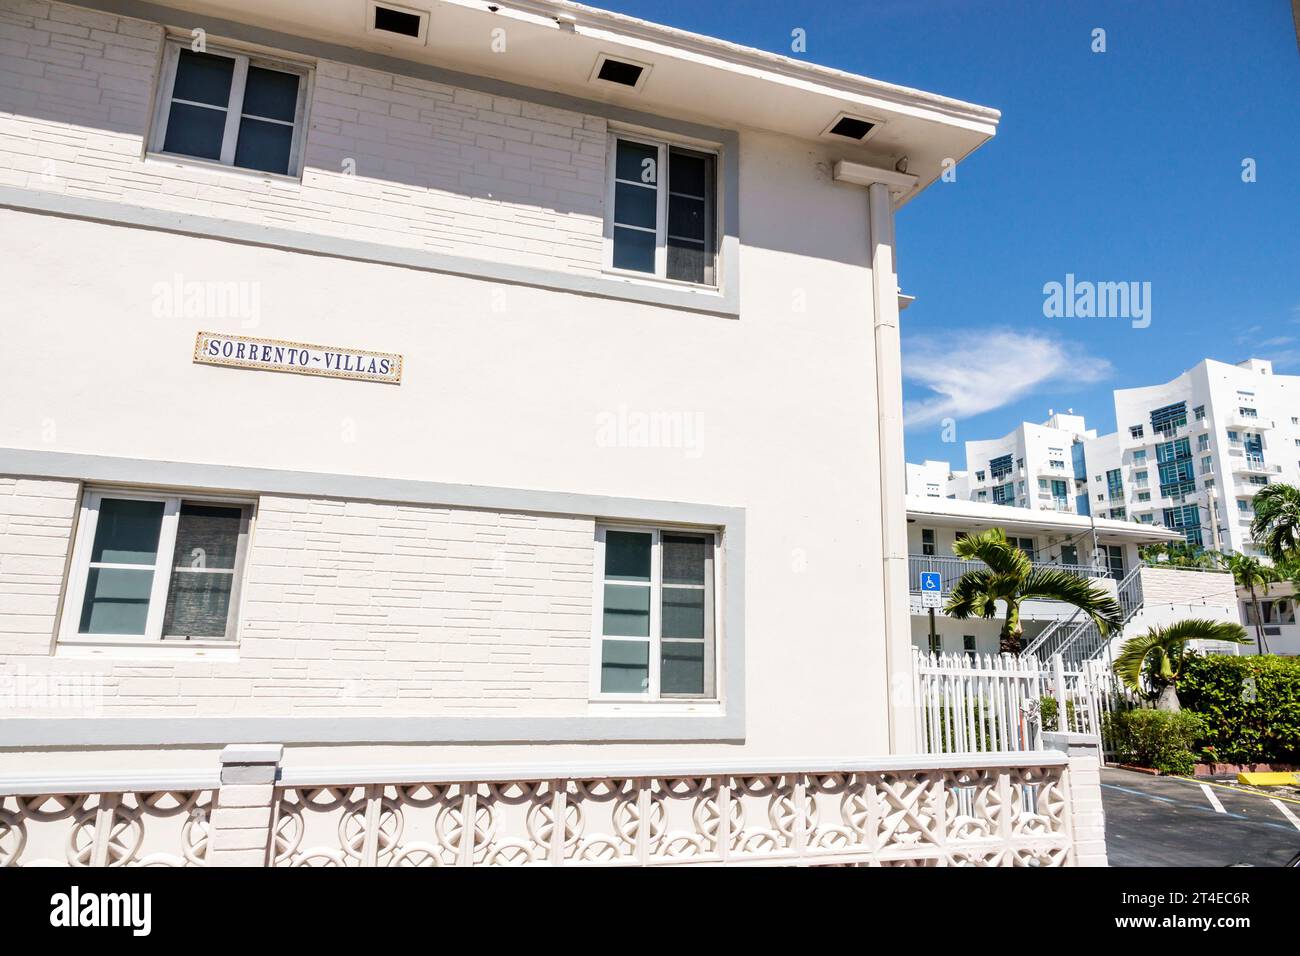 Miami Beach Florida,outside exterior,building front entrance condos,North Beach,Sorrento Villas sign,Miami Modernism MiMo style architecture,hotels mo Stock Photo